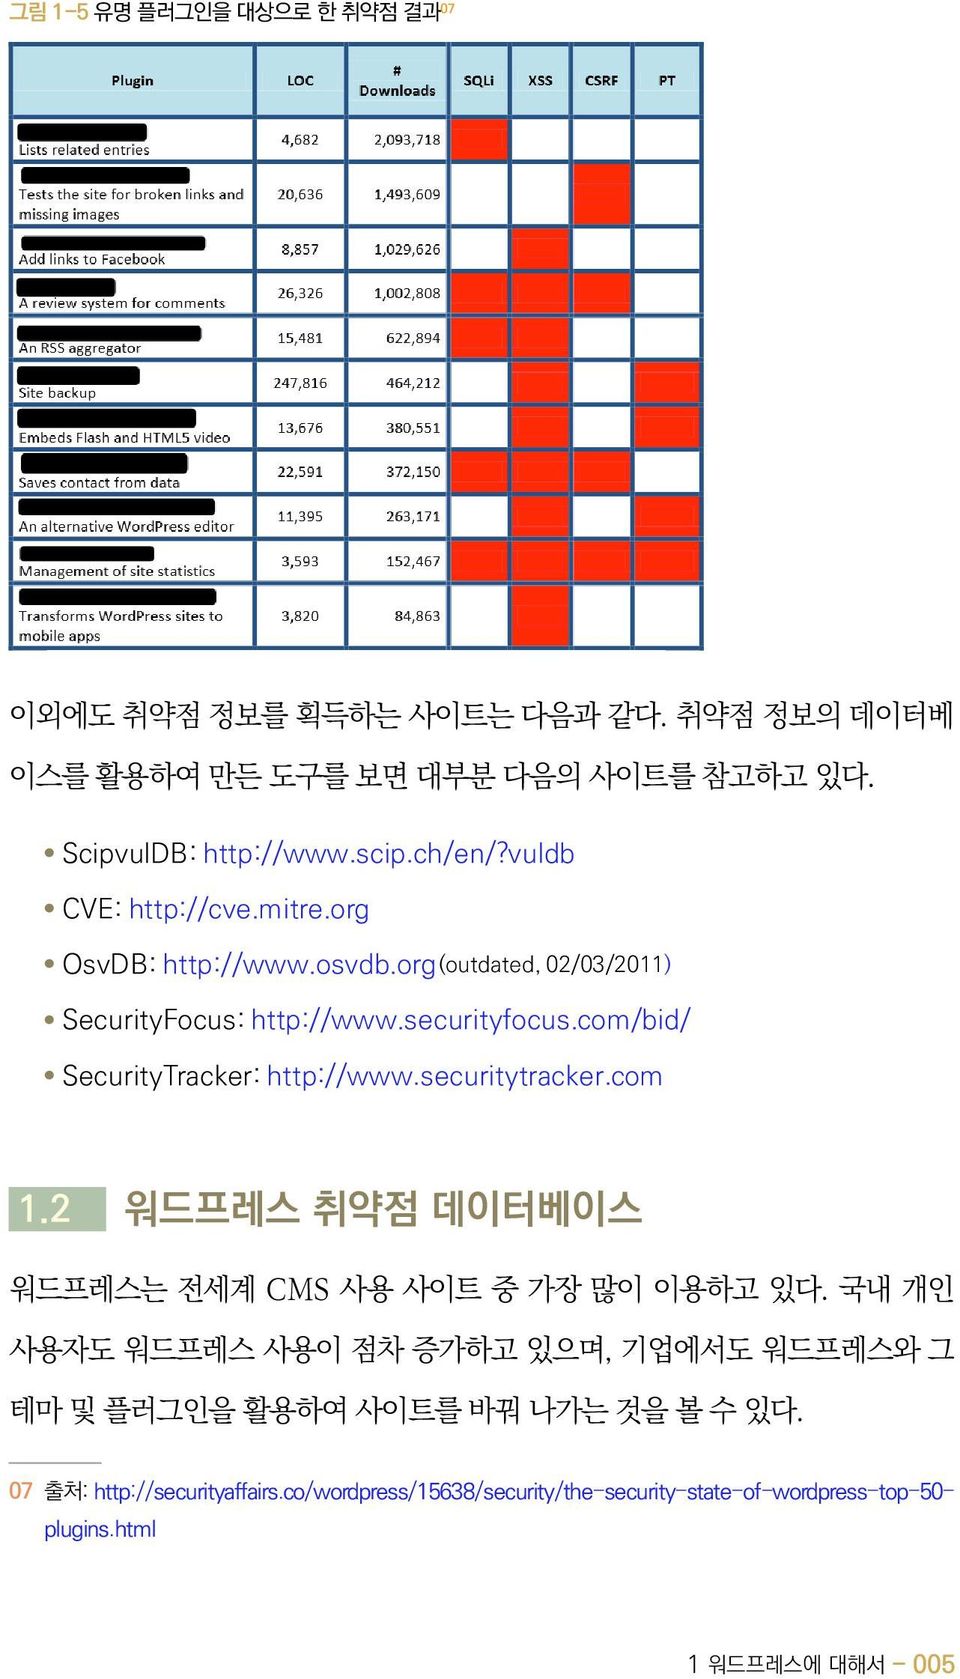 com/bid/ SecurityTracker: http://www.securitytracker.com 1.2 워드프레스 취약점 데이터베이스 워드프레스는 전세계 CMS 사용 사이트 중 가장 많이 이용하고 있다.